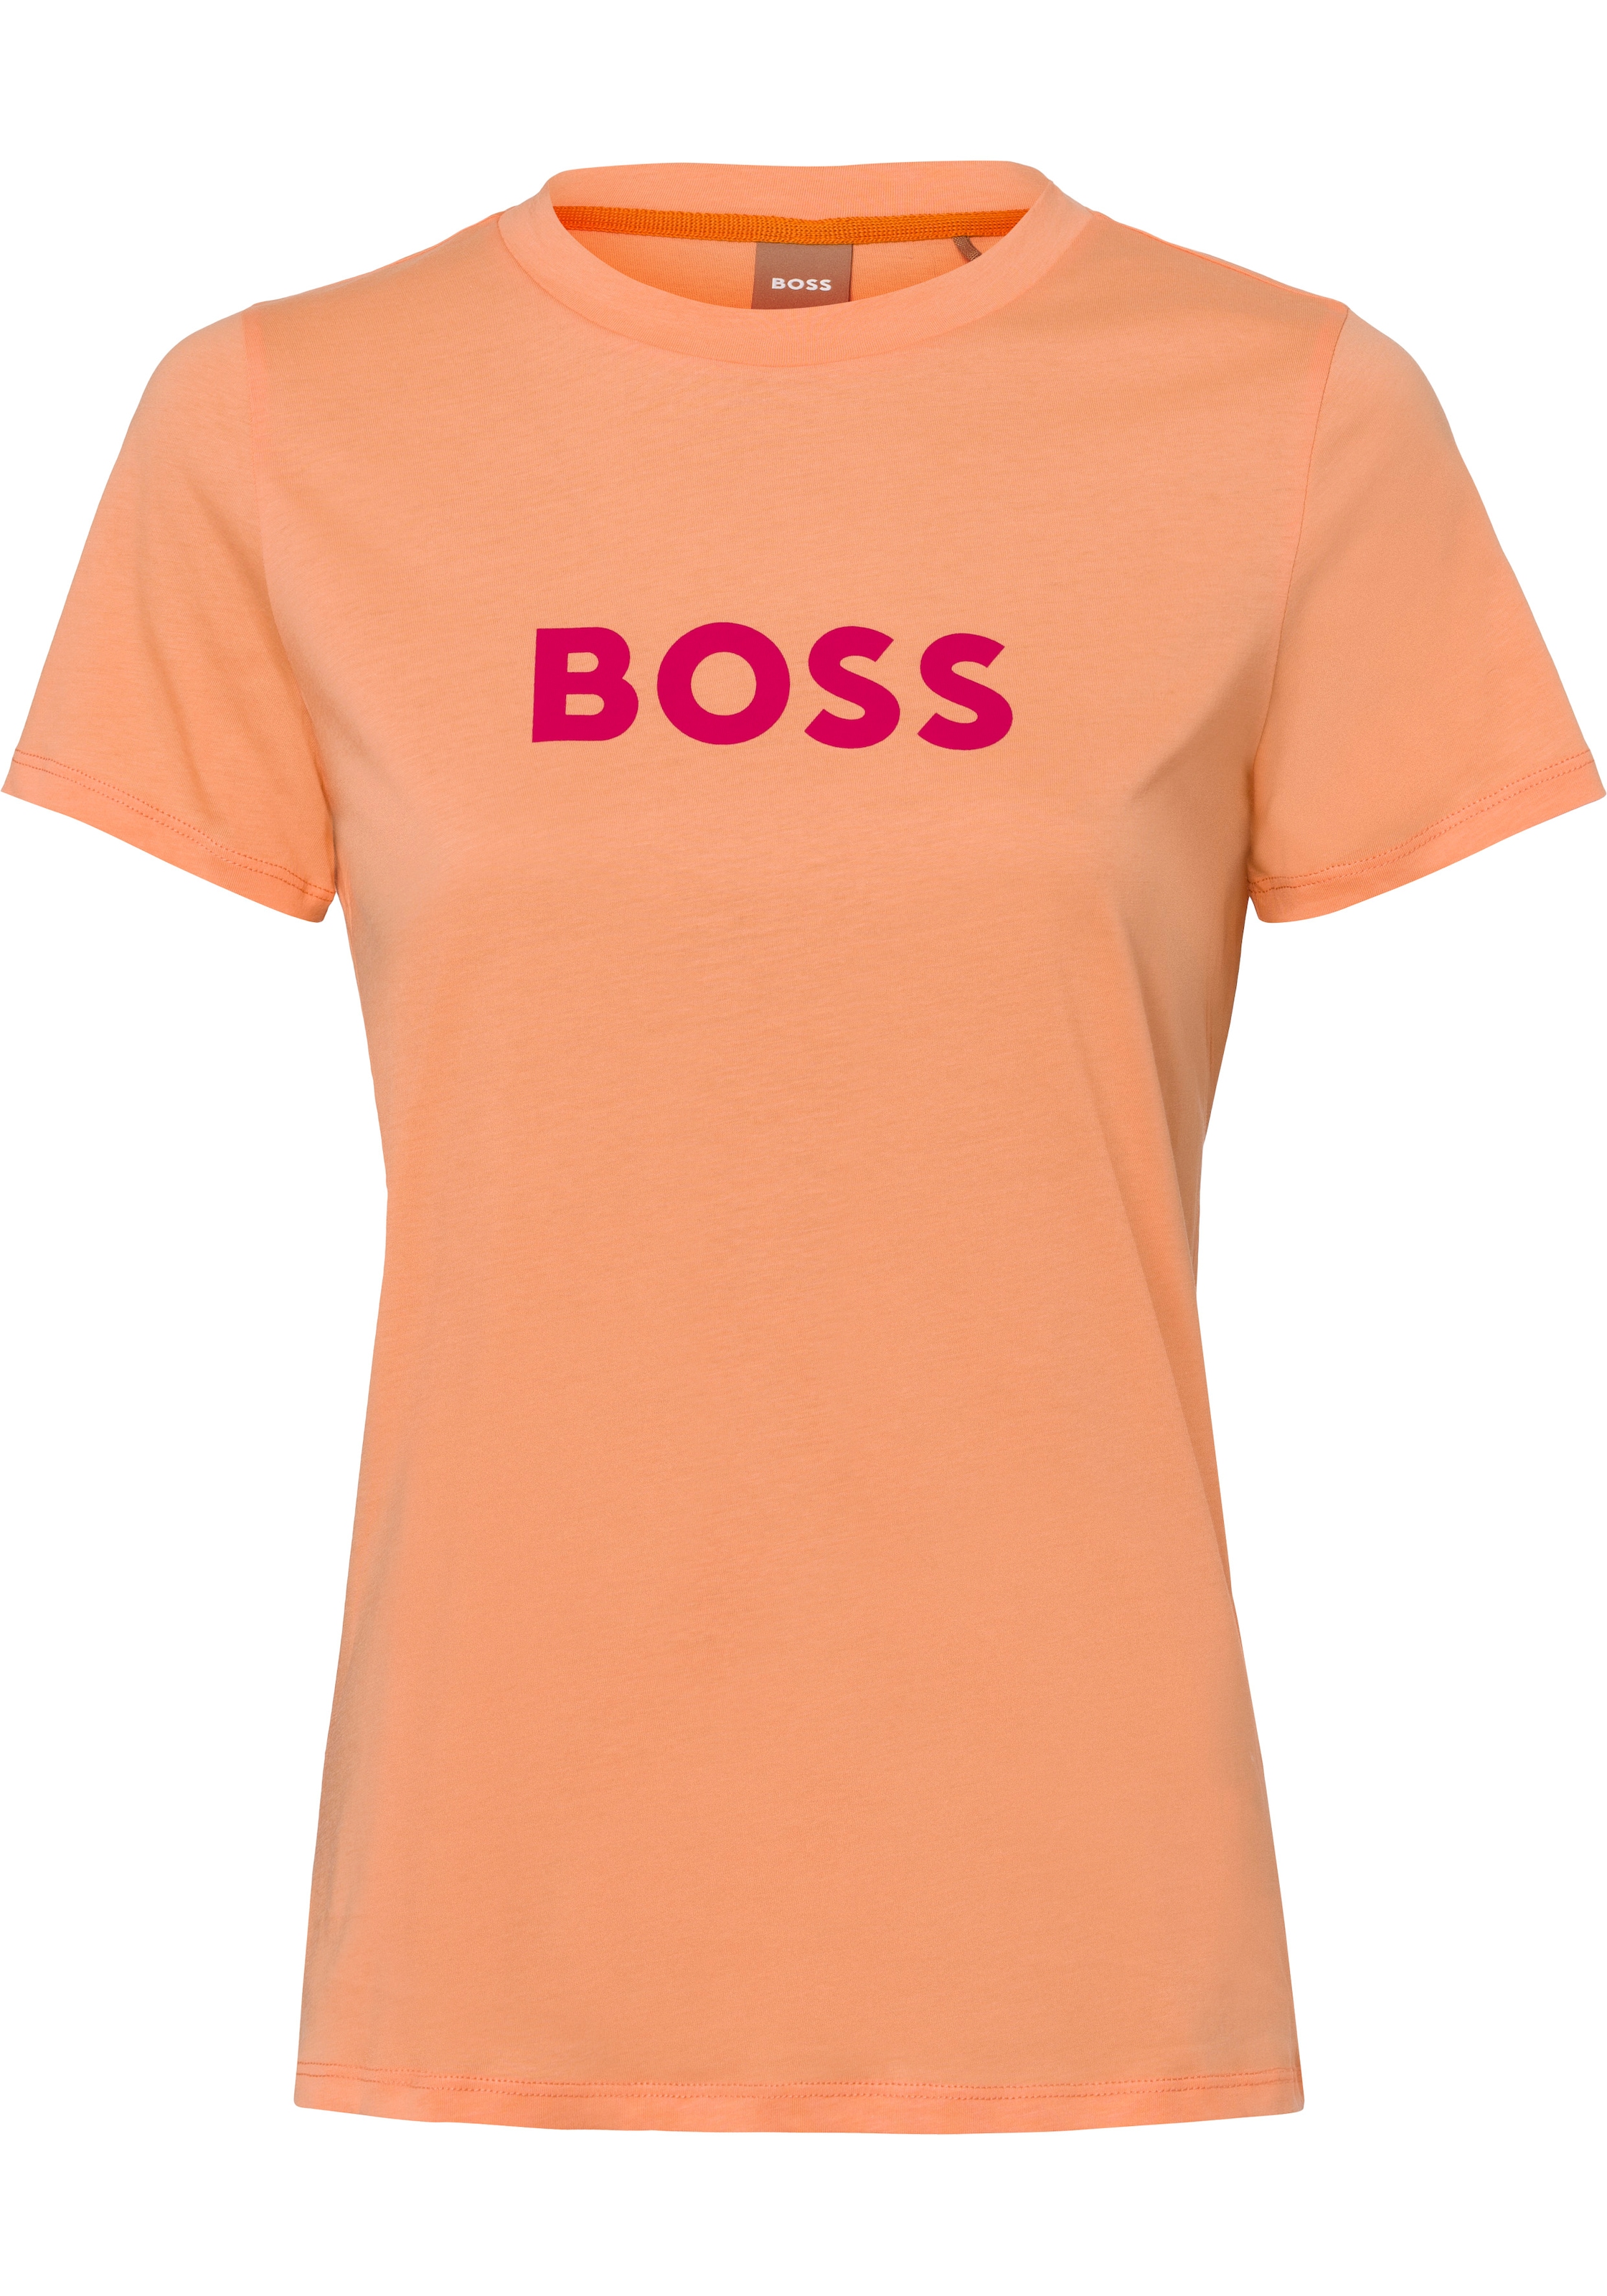 Brust ORANGE (1 auf mit »C_Elogo_5«, T-Shirt bei BOSS tlg.), BOSS Logoschriftzug der ♕